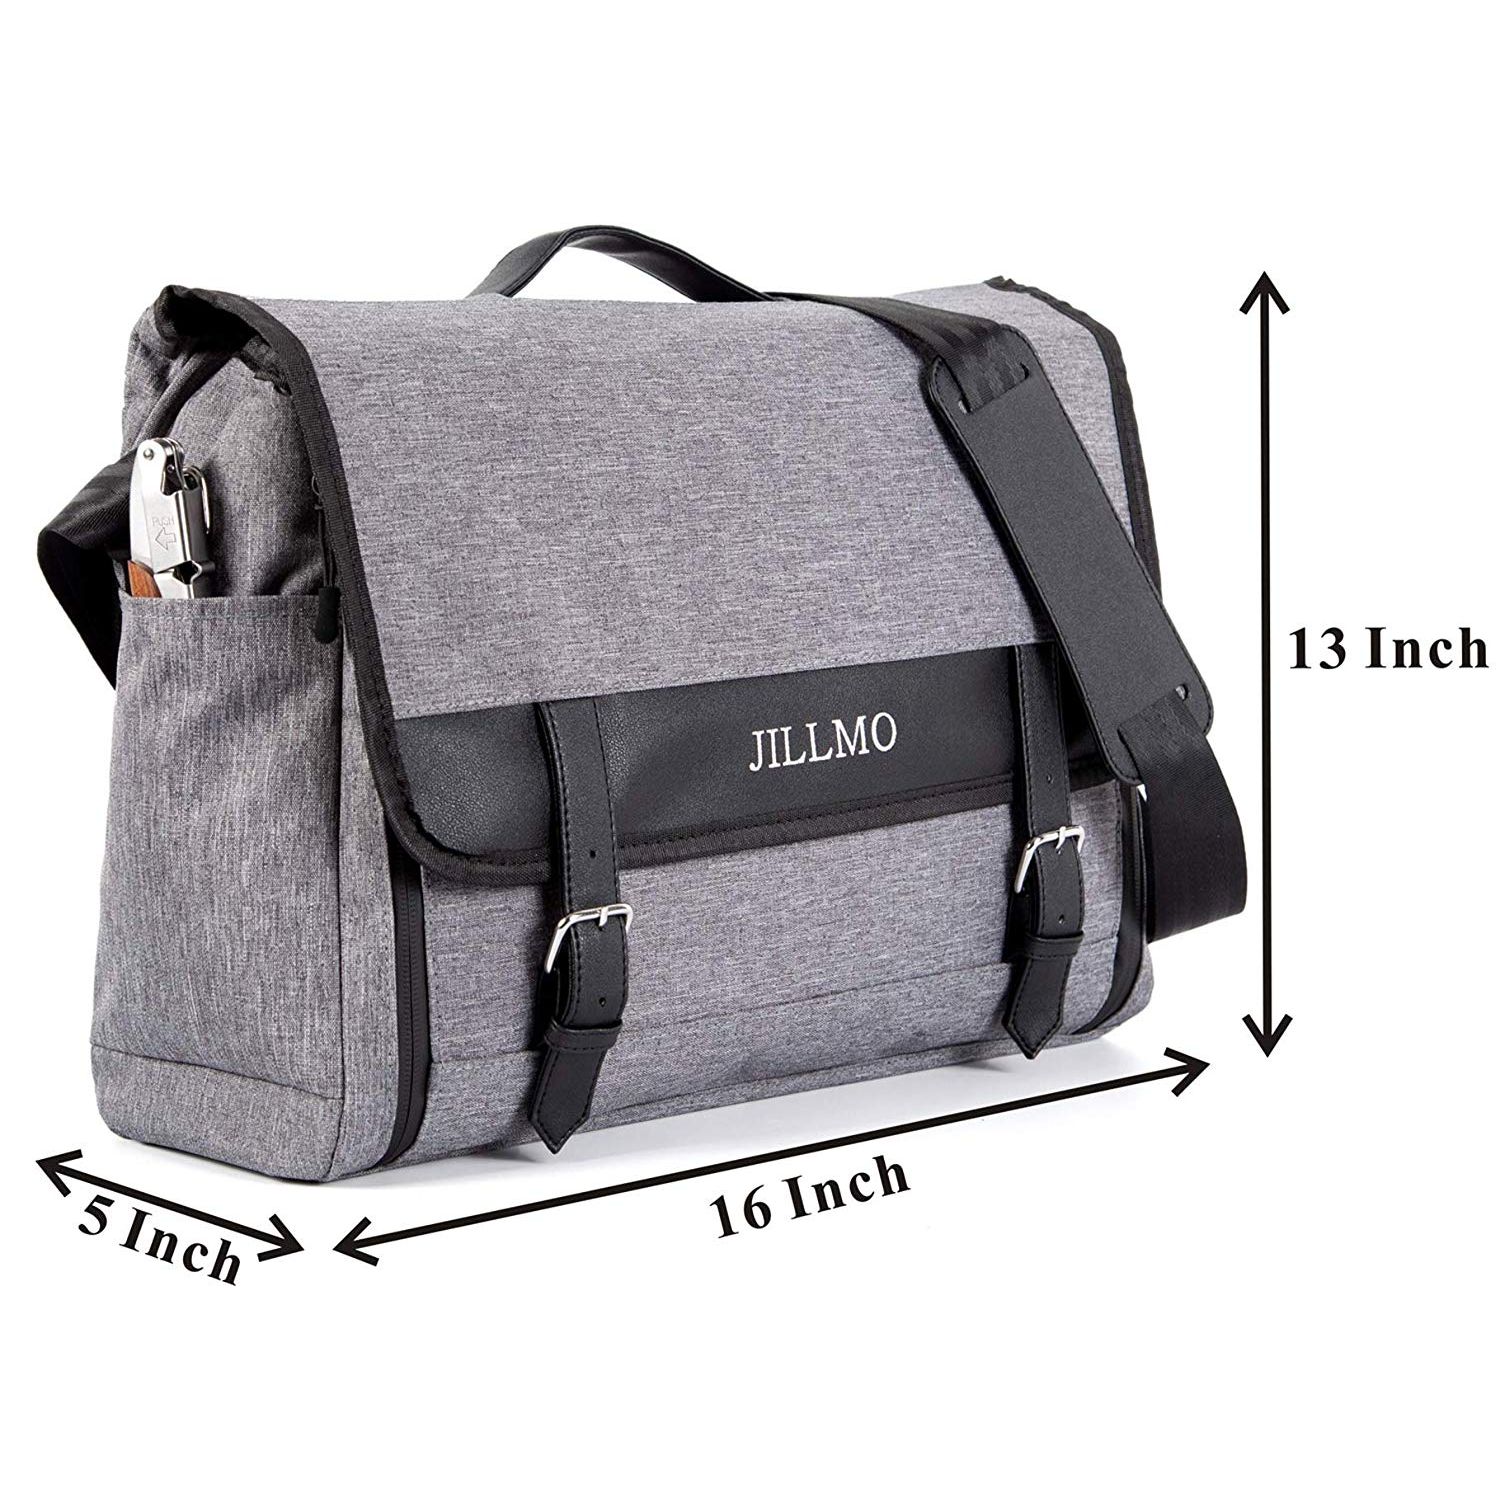 jillmo travel bar bag